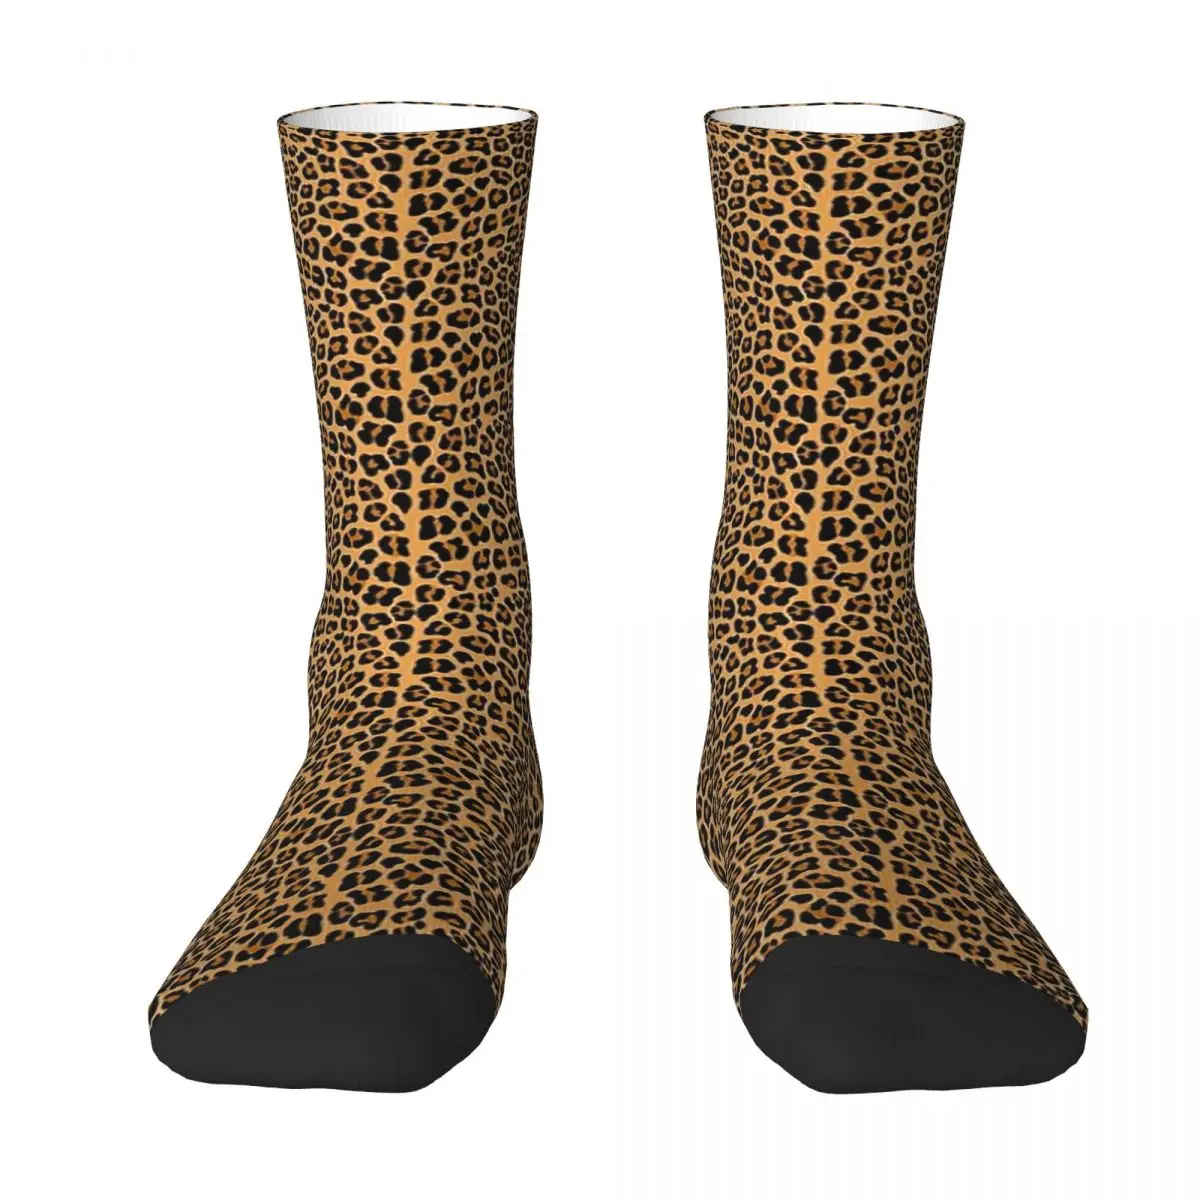 Leopard Print Adult Socks Unisex socks,men Socks women Socks 3d simulation animal foot socks leopard snake skin print creative long socks unisex fashion harajuku christmas high ankle socks